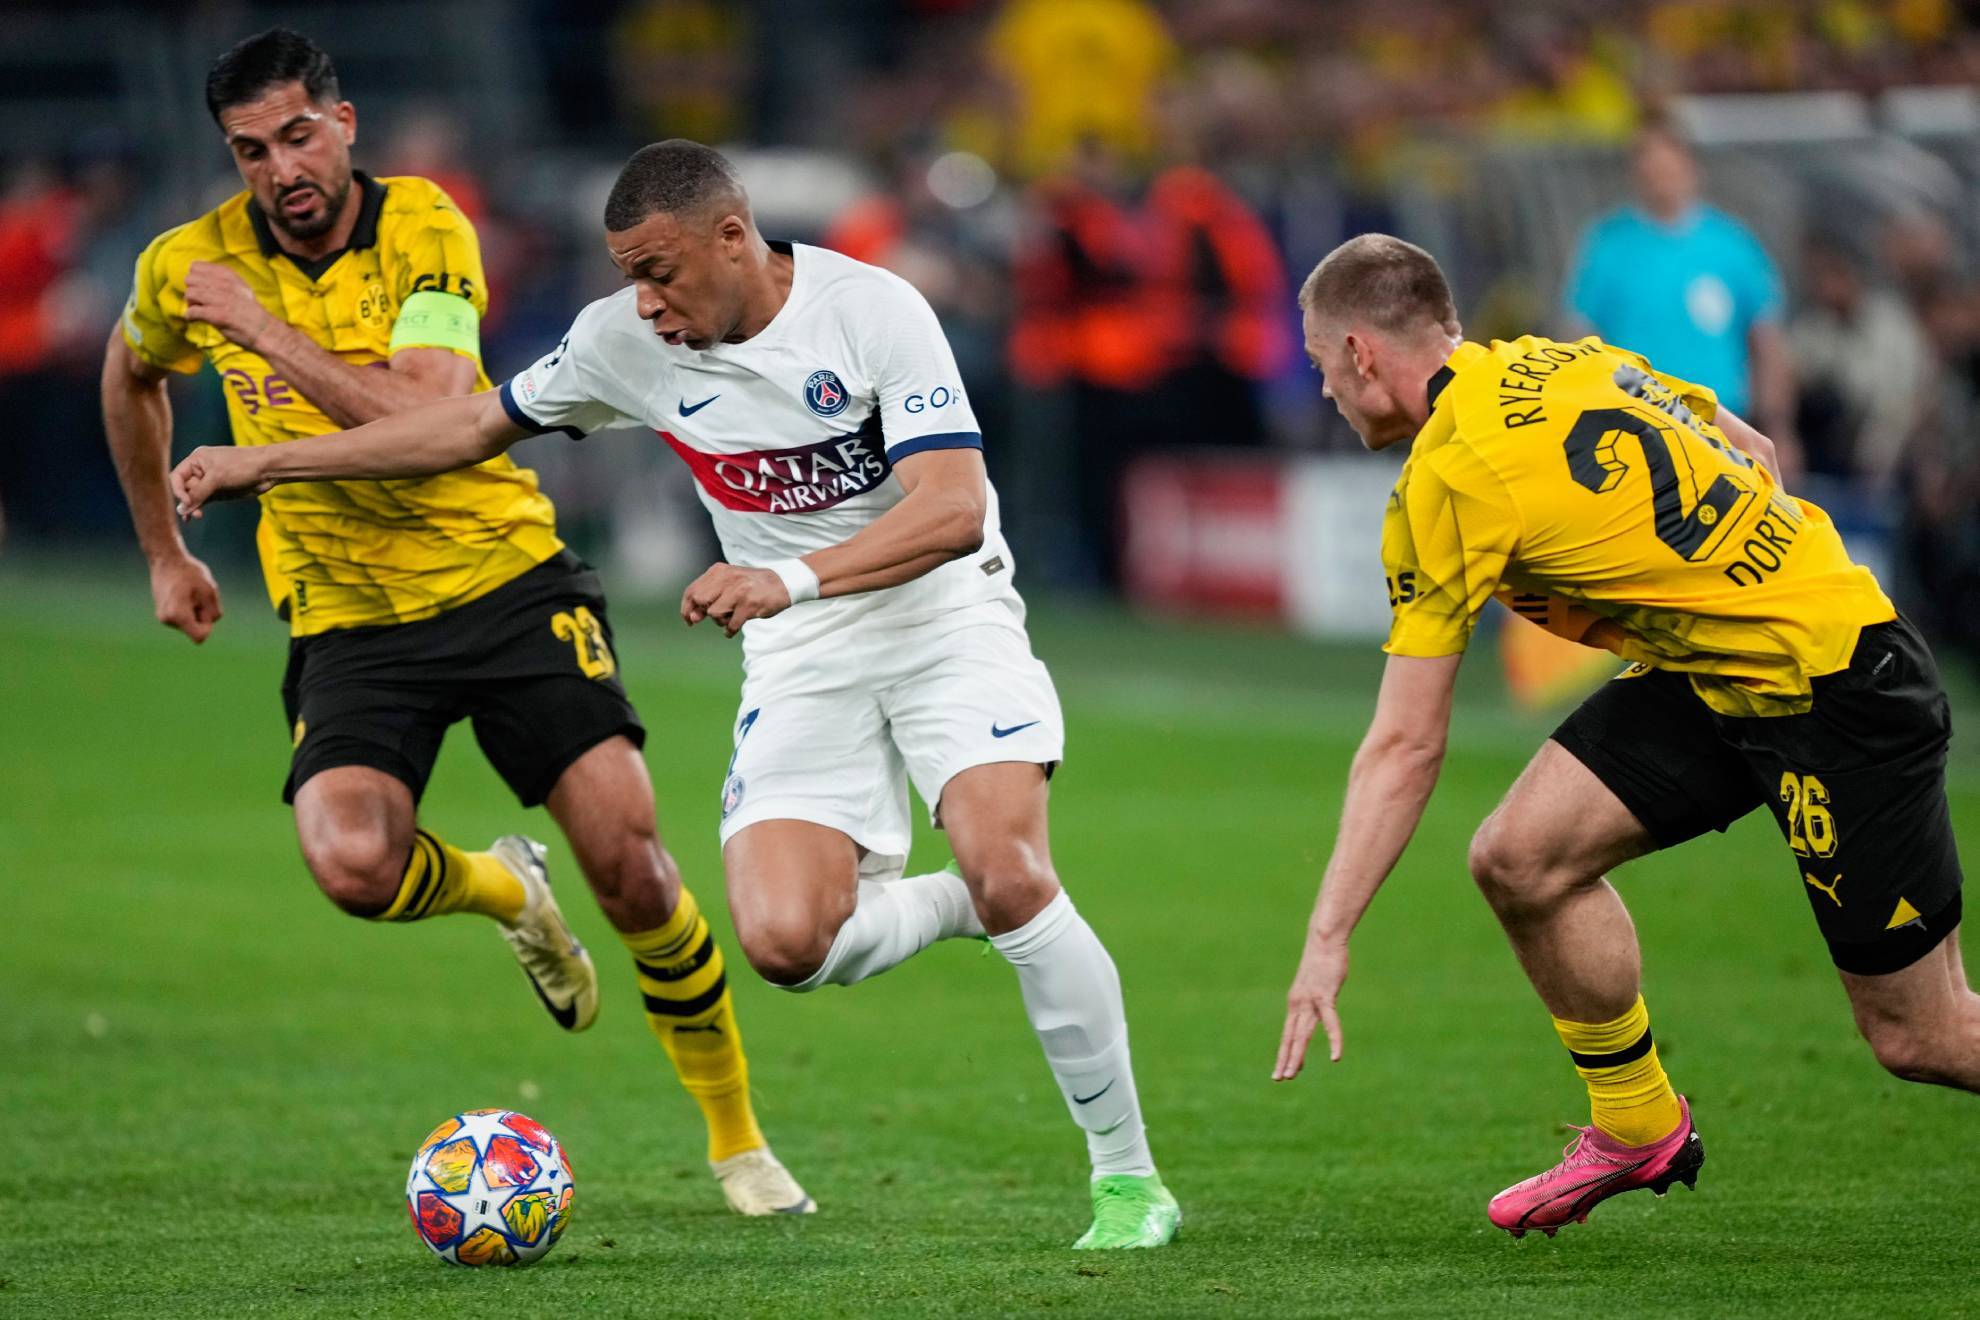 Pelatih PSG Janji Menunjukkan Permainan Yang Indah Saat Melawan Borrusia Dortmund